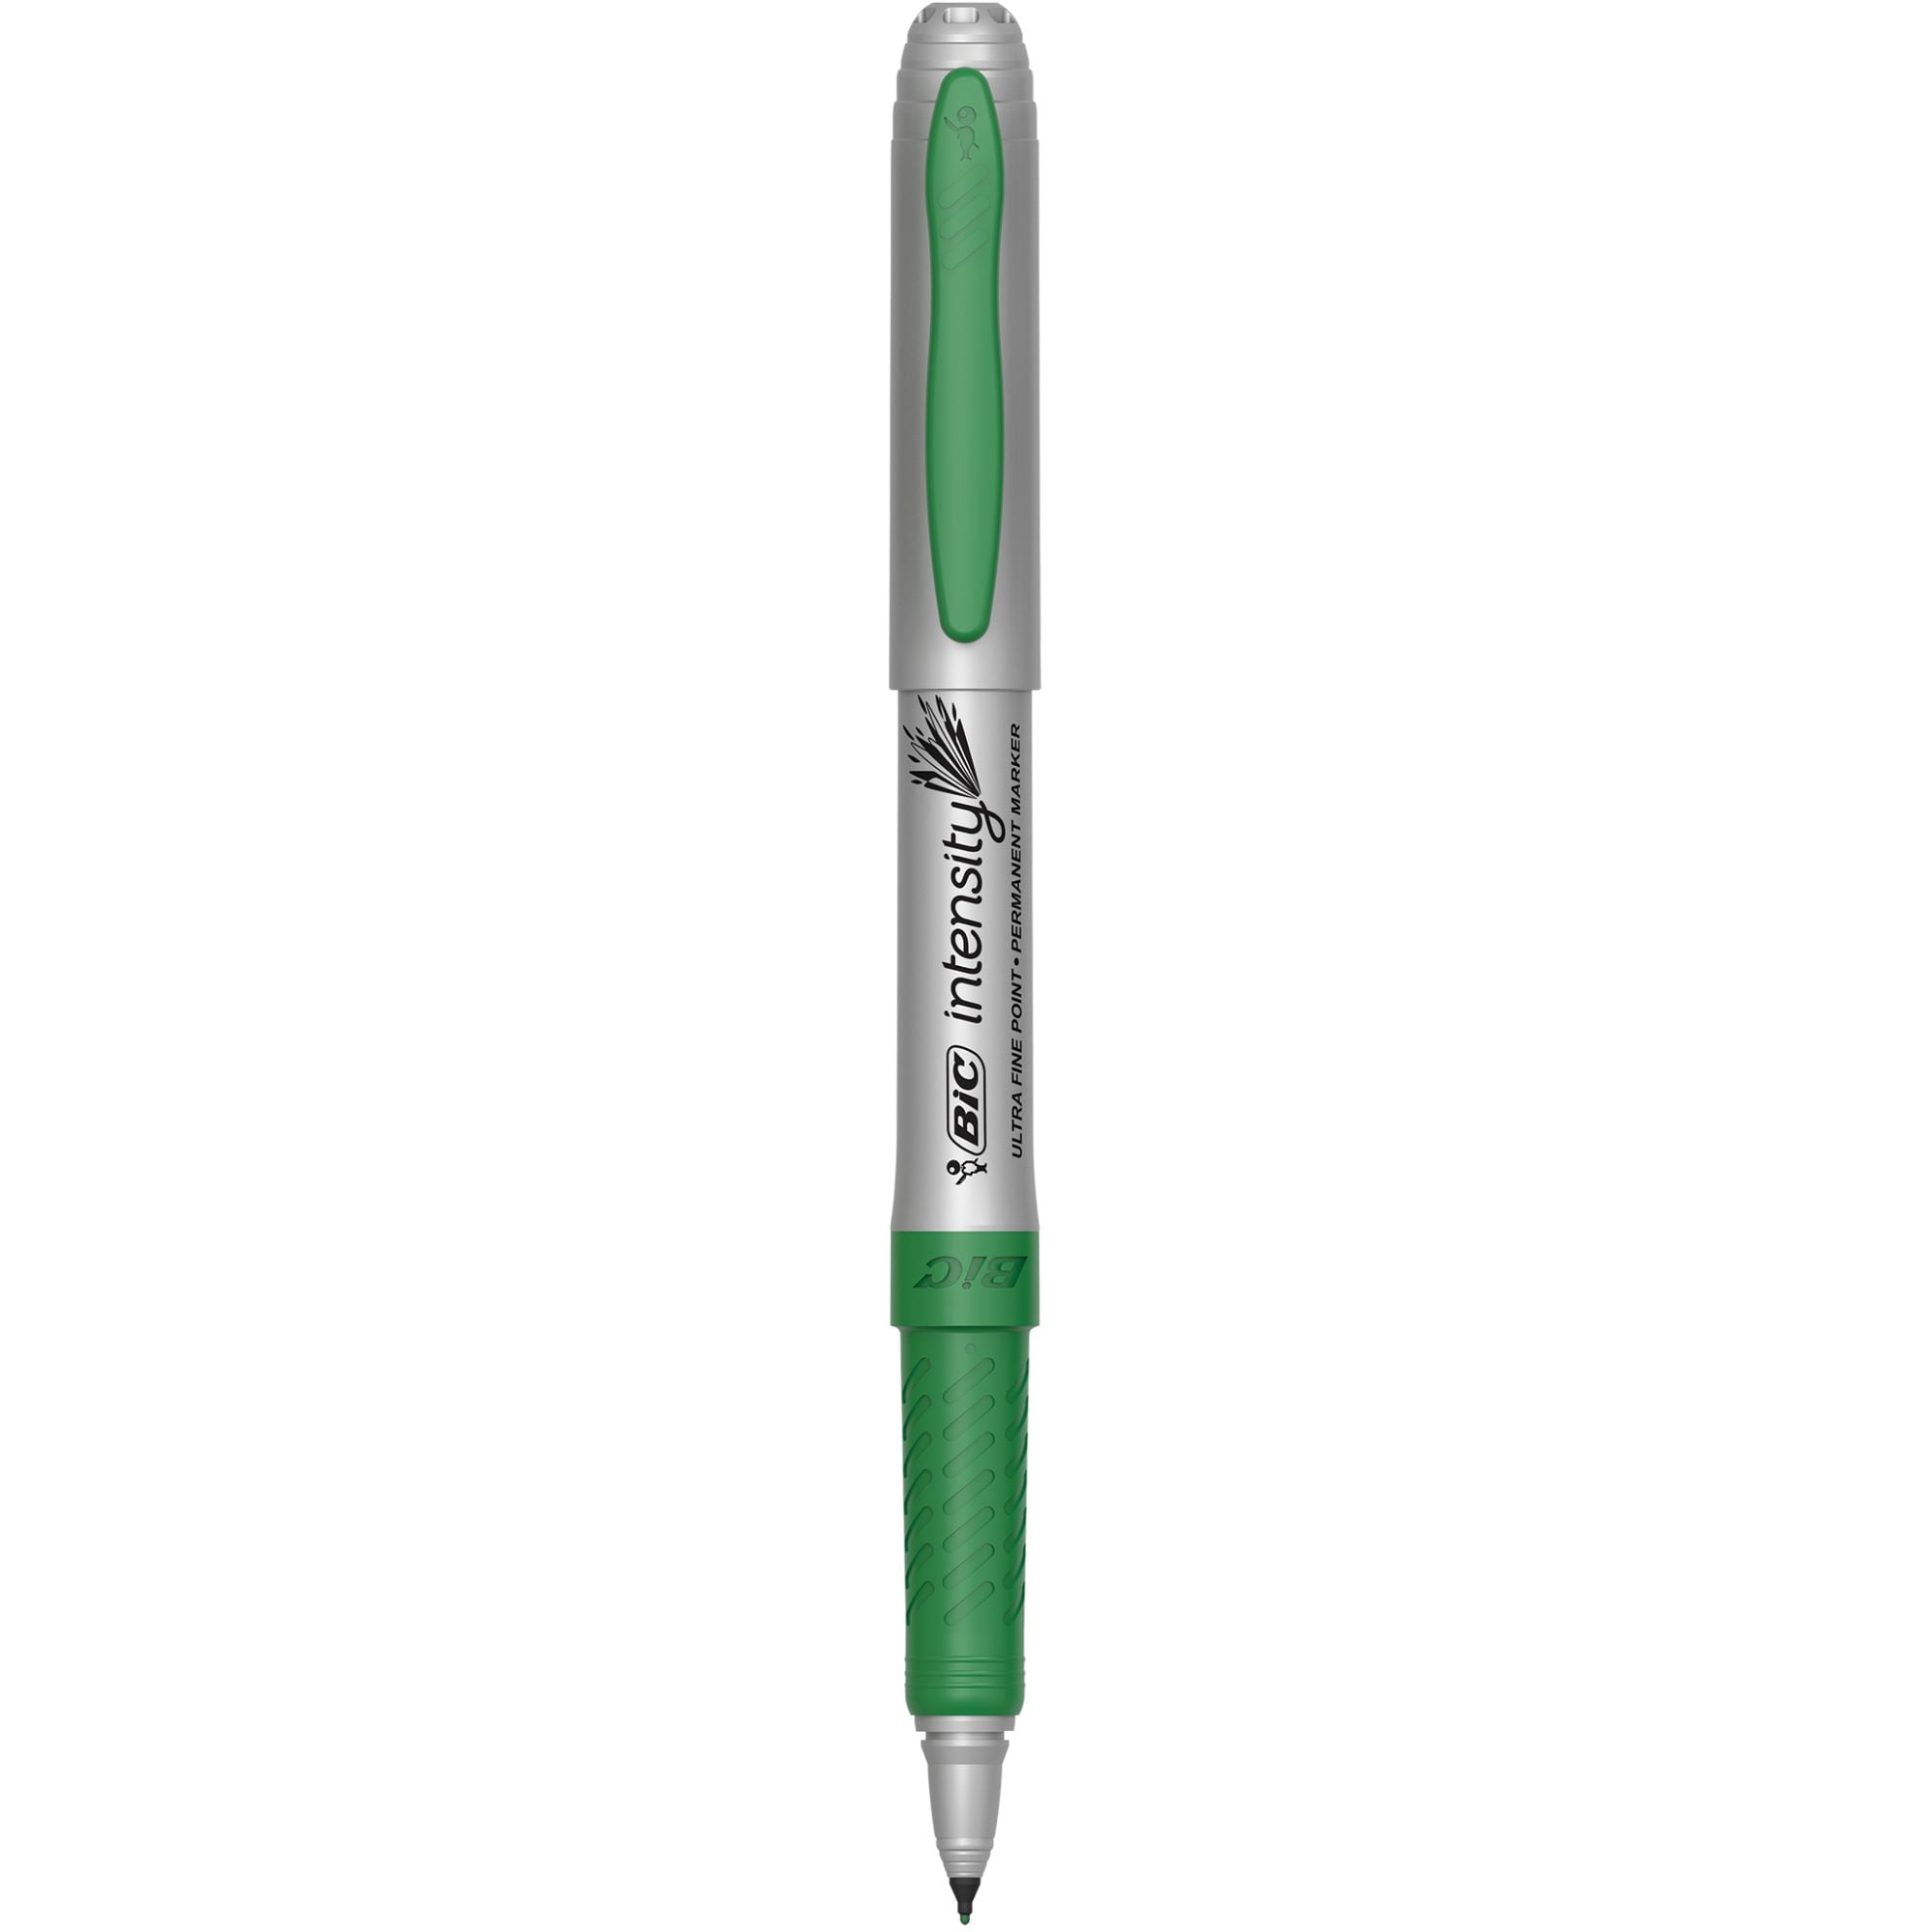 BICFPIN51A-3 (3 PK) Bic Intensity Marker Pens